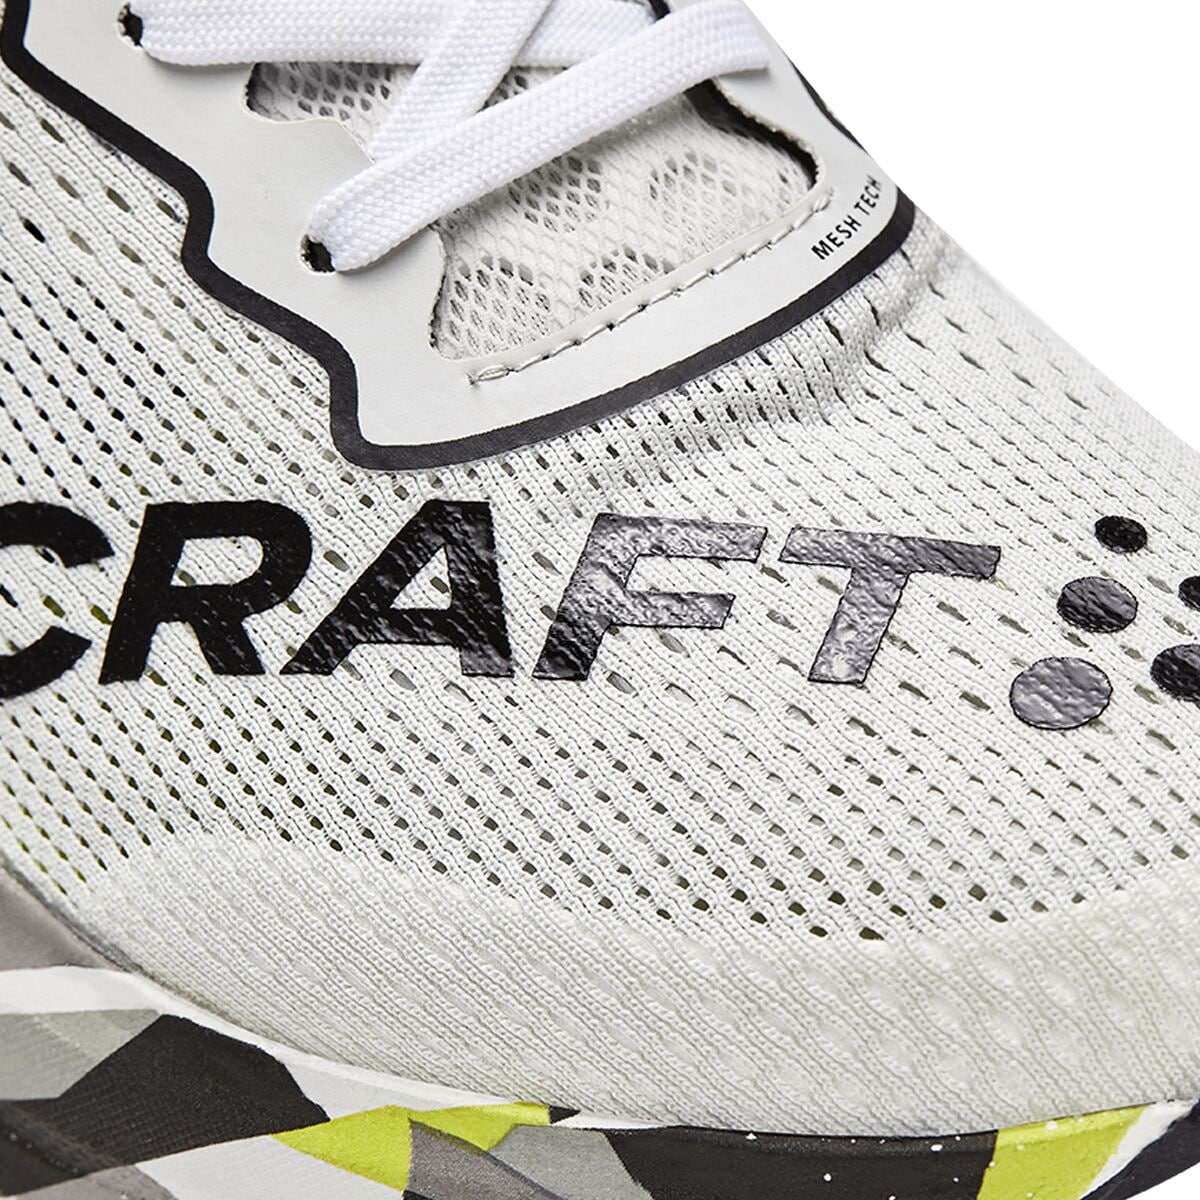 Craft CTM Ultra Carbon 2 Running Shoe - Women's - Footwear